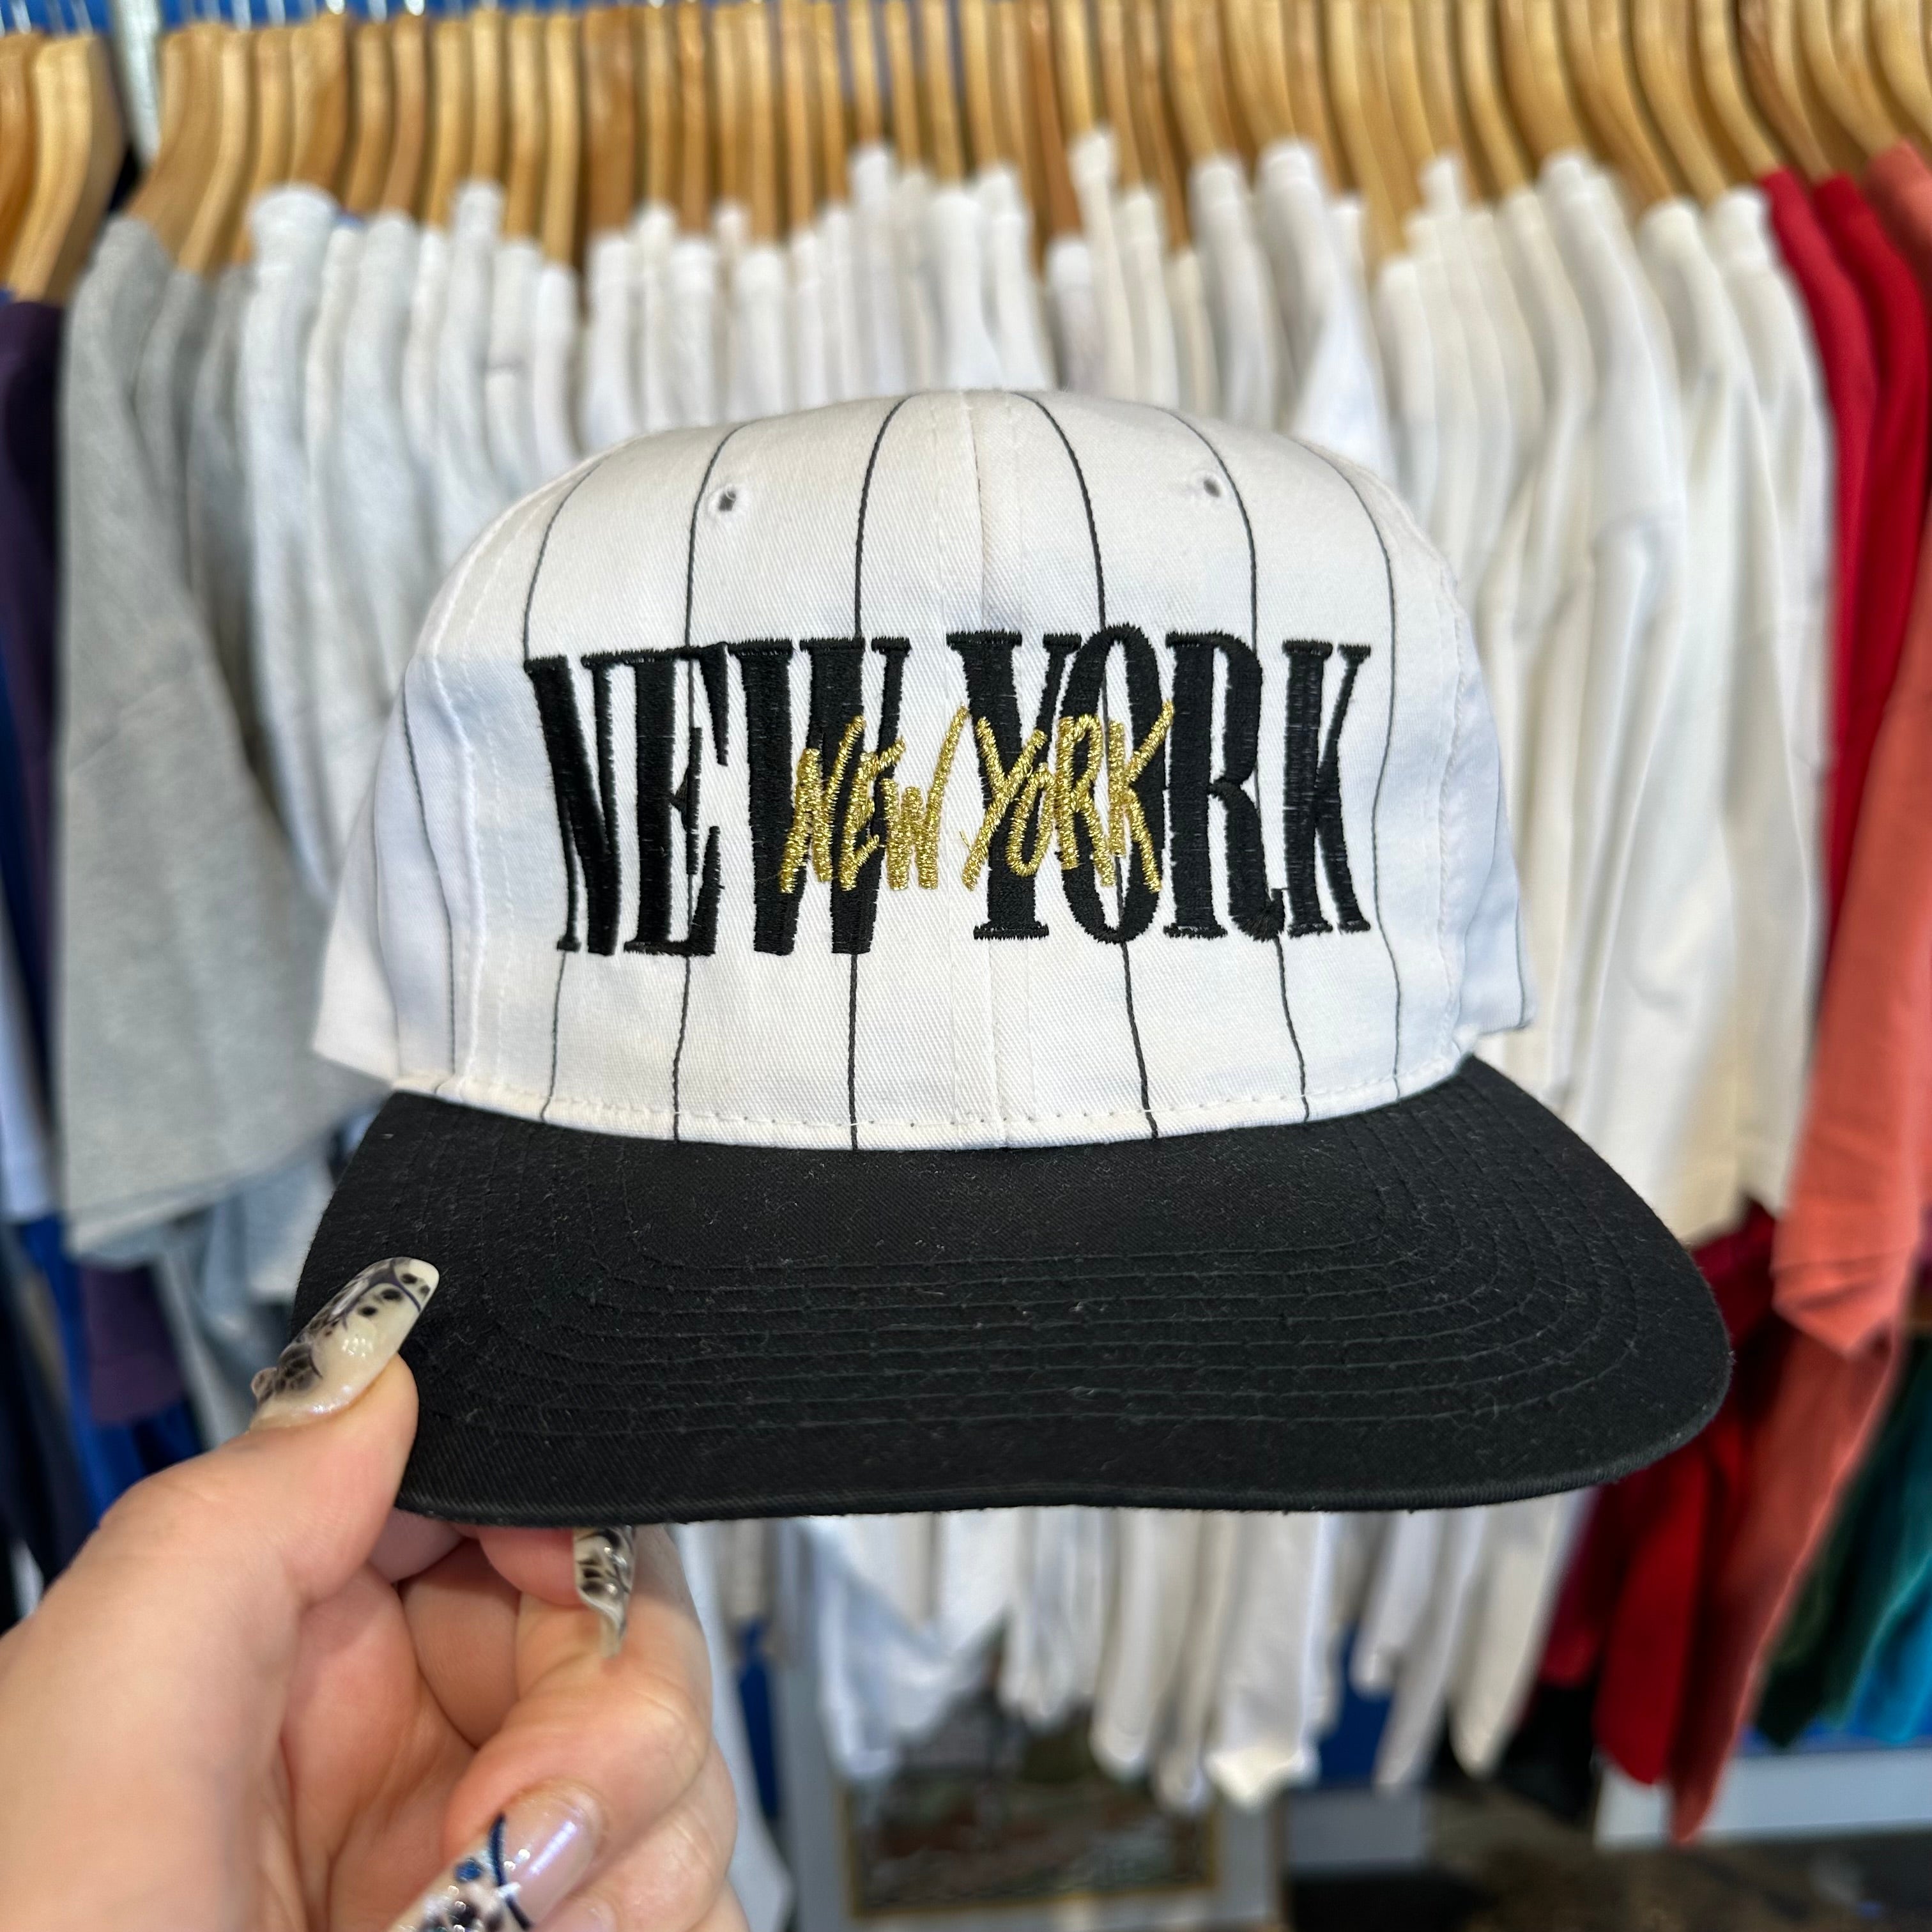 New York, New York Striped Hat